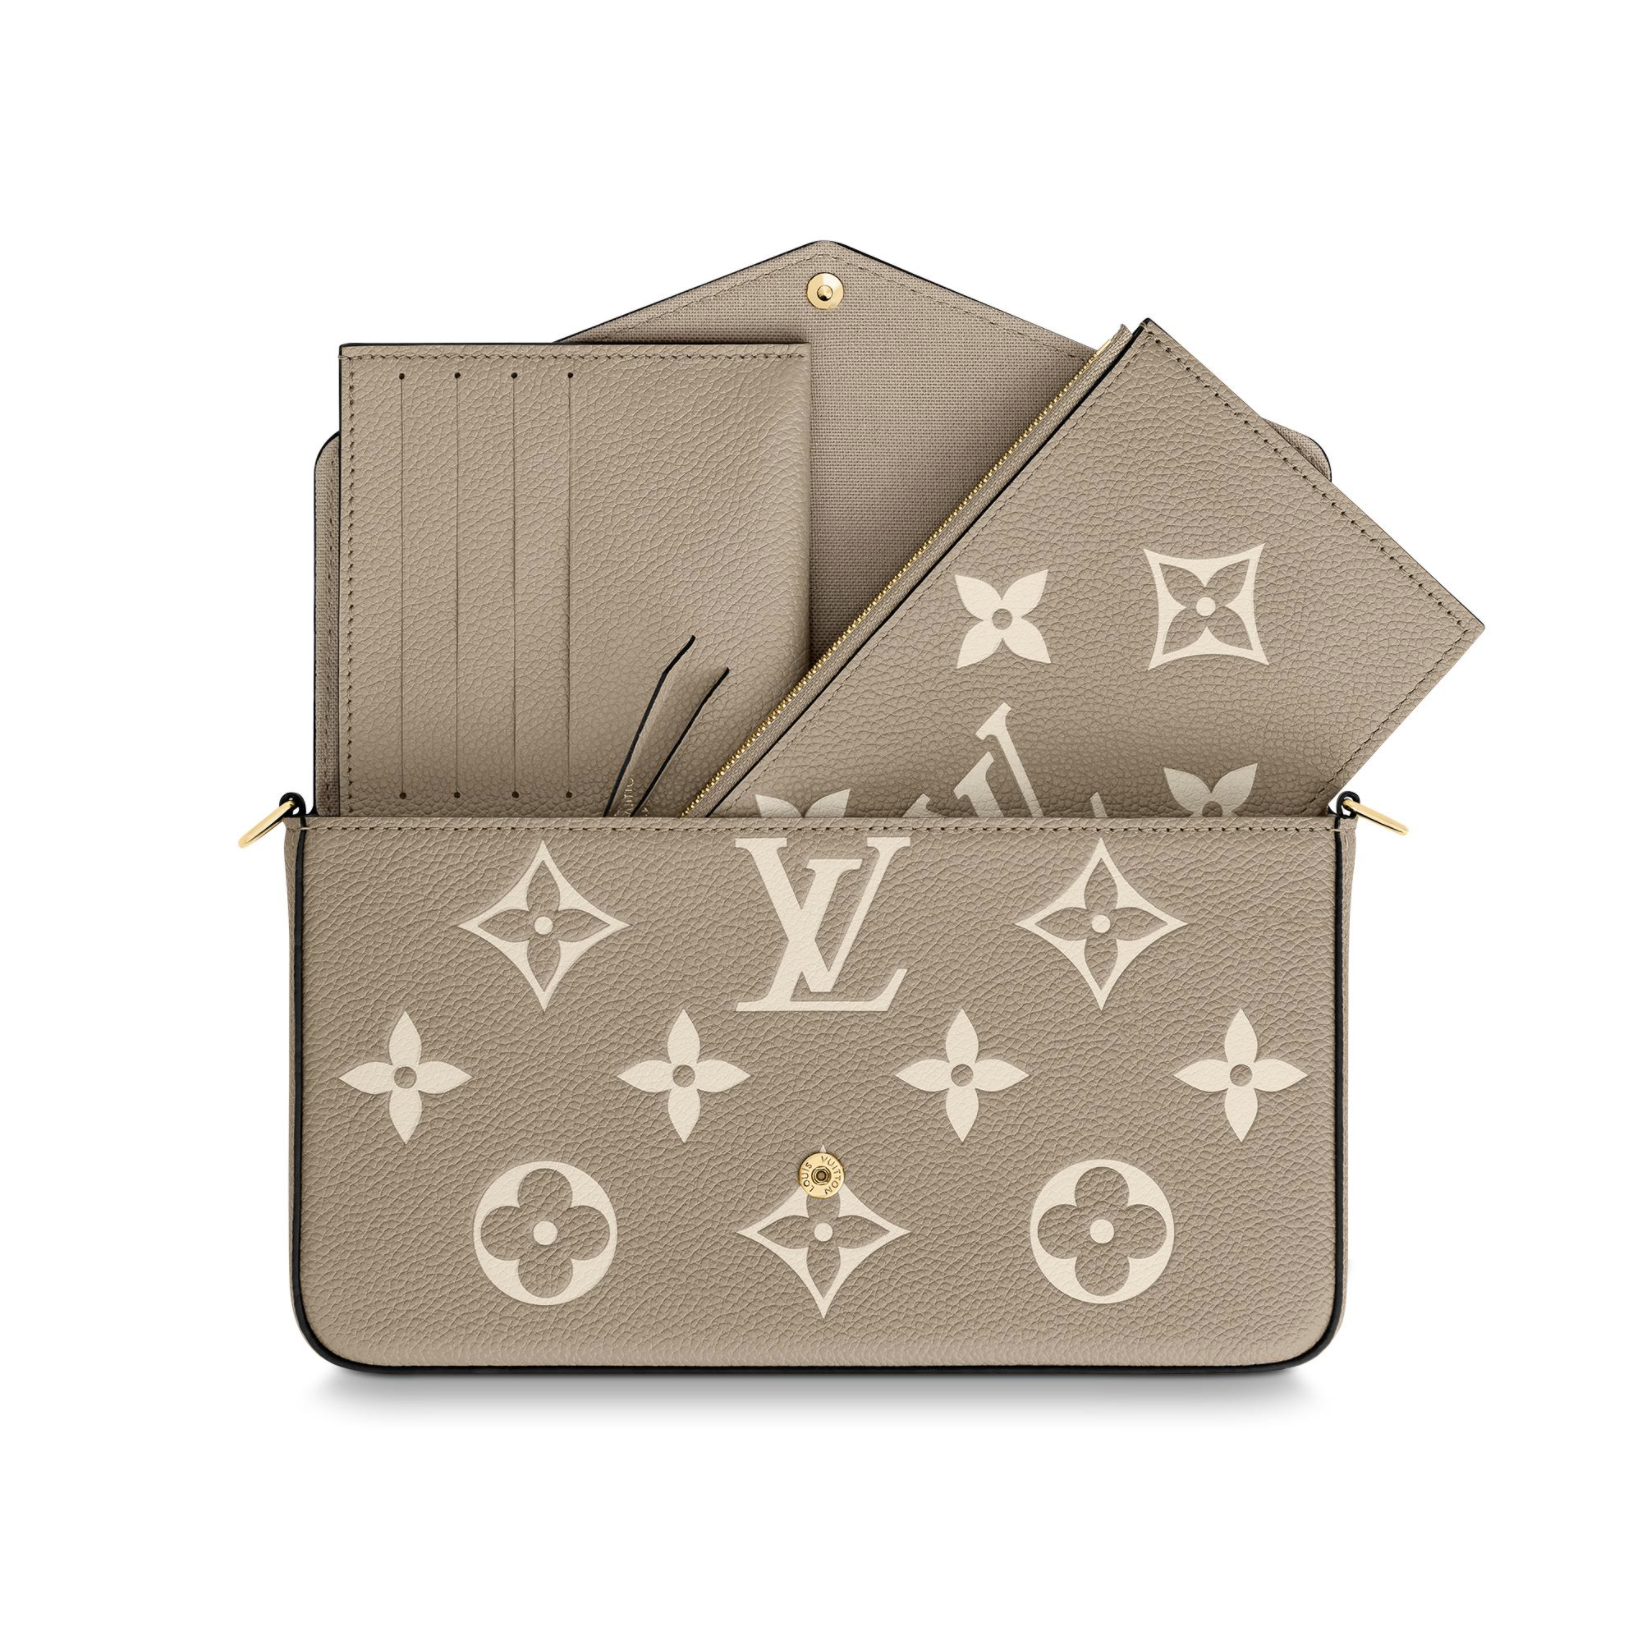 Louis Vuitton Tourterelle Empreinte Pochette Felicie M69977 by The-Collectory